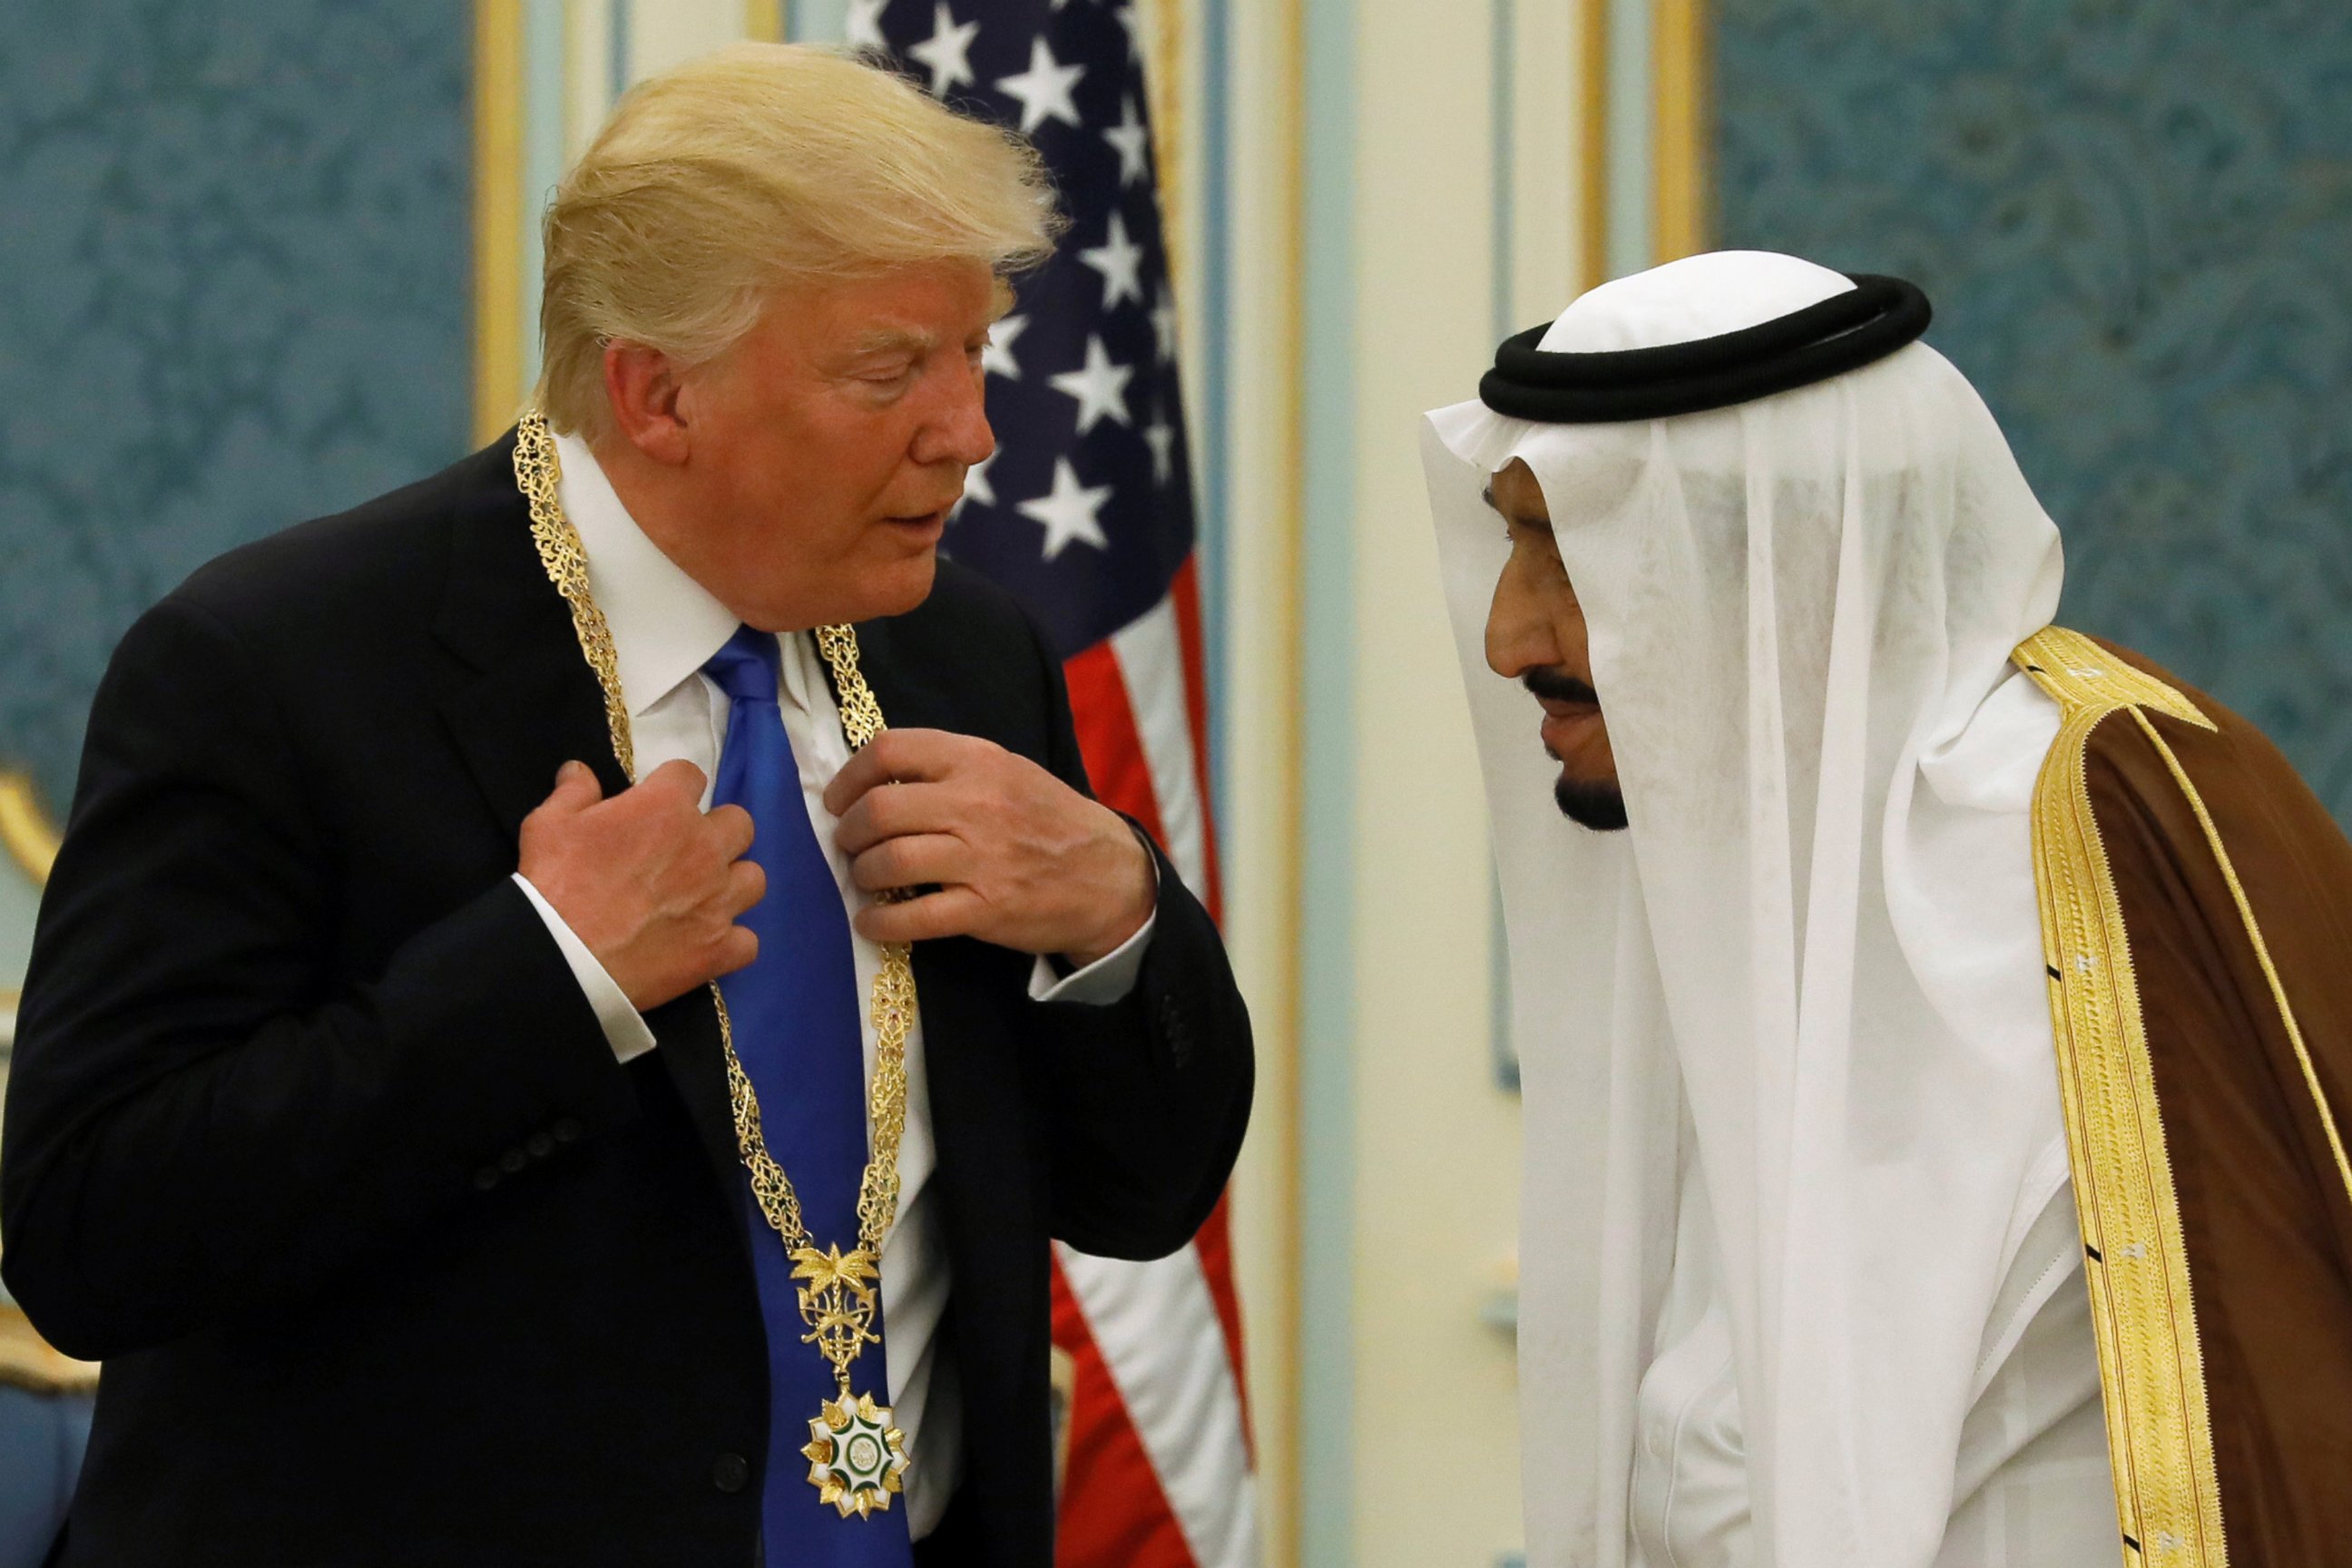 PHOTO: Saudi Arabia's King Salman bin Abdulaziz Al Saud (R) presents President Donald Trump with the Collar of Abdulaziz Al Saud Medal at the Royal Court in Riyadh, Saudi Arabia, May 20, 2017.